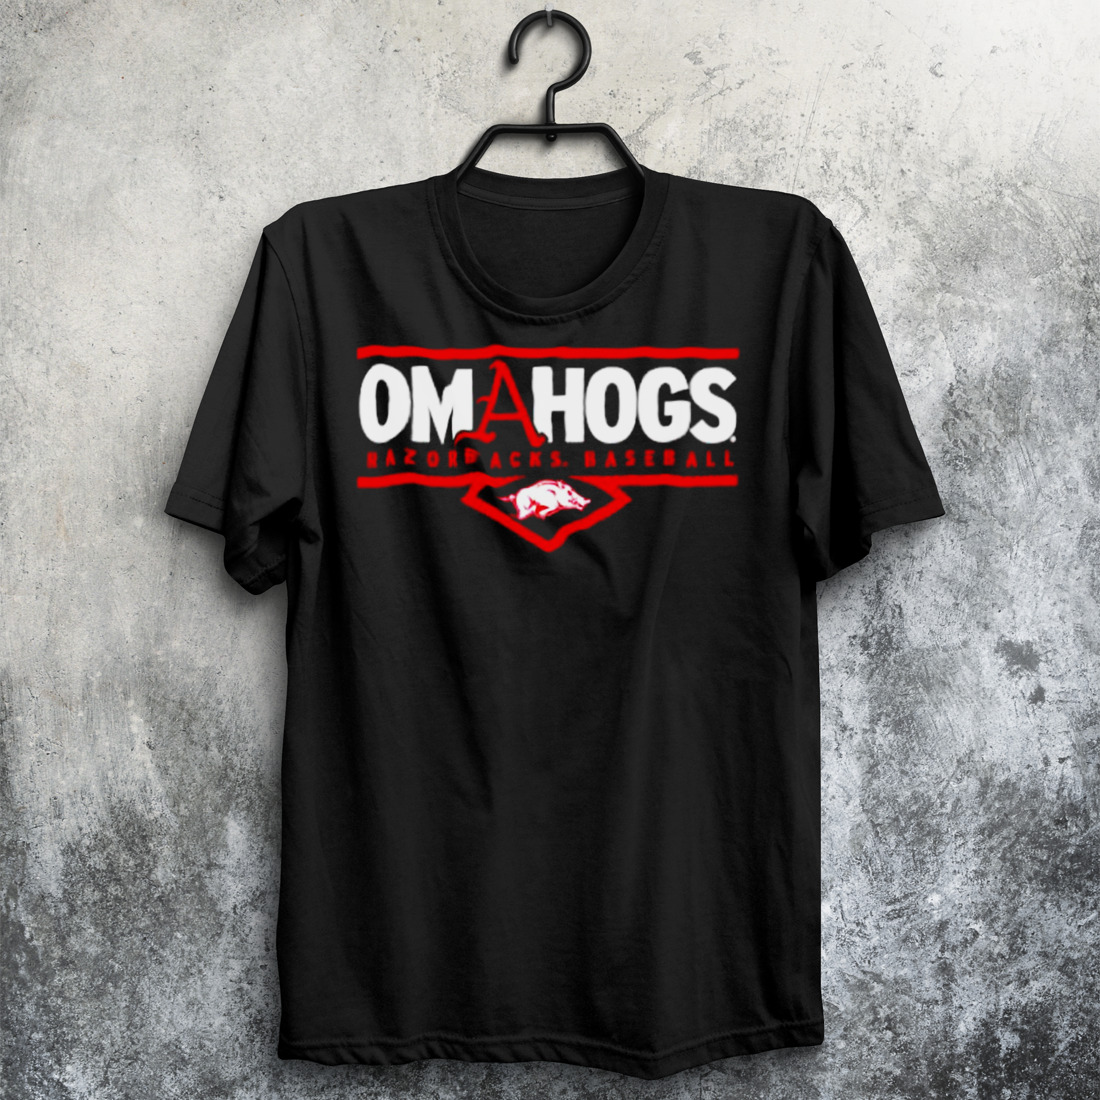 Arkansas Razorbacks Baseball Omahogs shirt